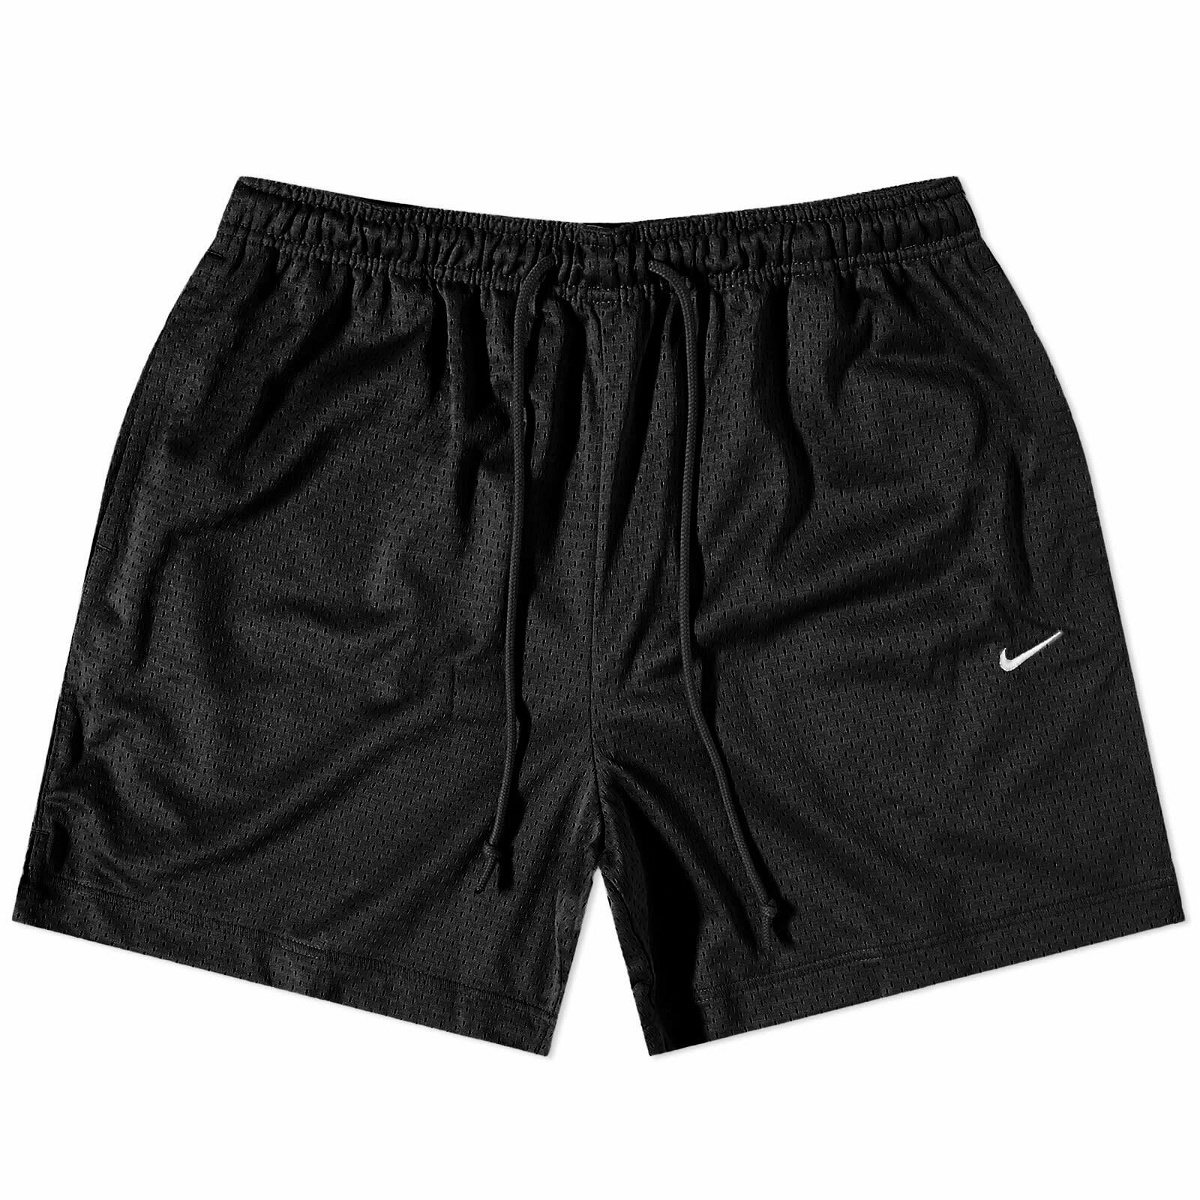 Photo: Nike Men's Authentics Mesh Short in Black/White